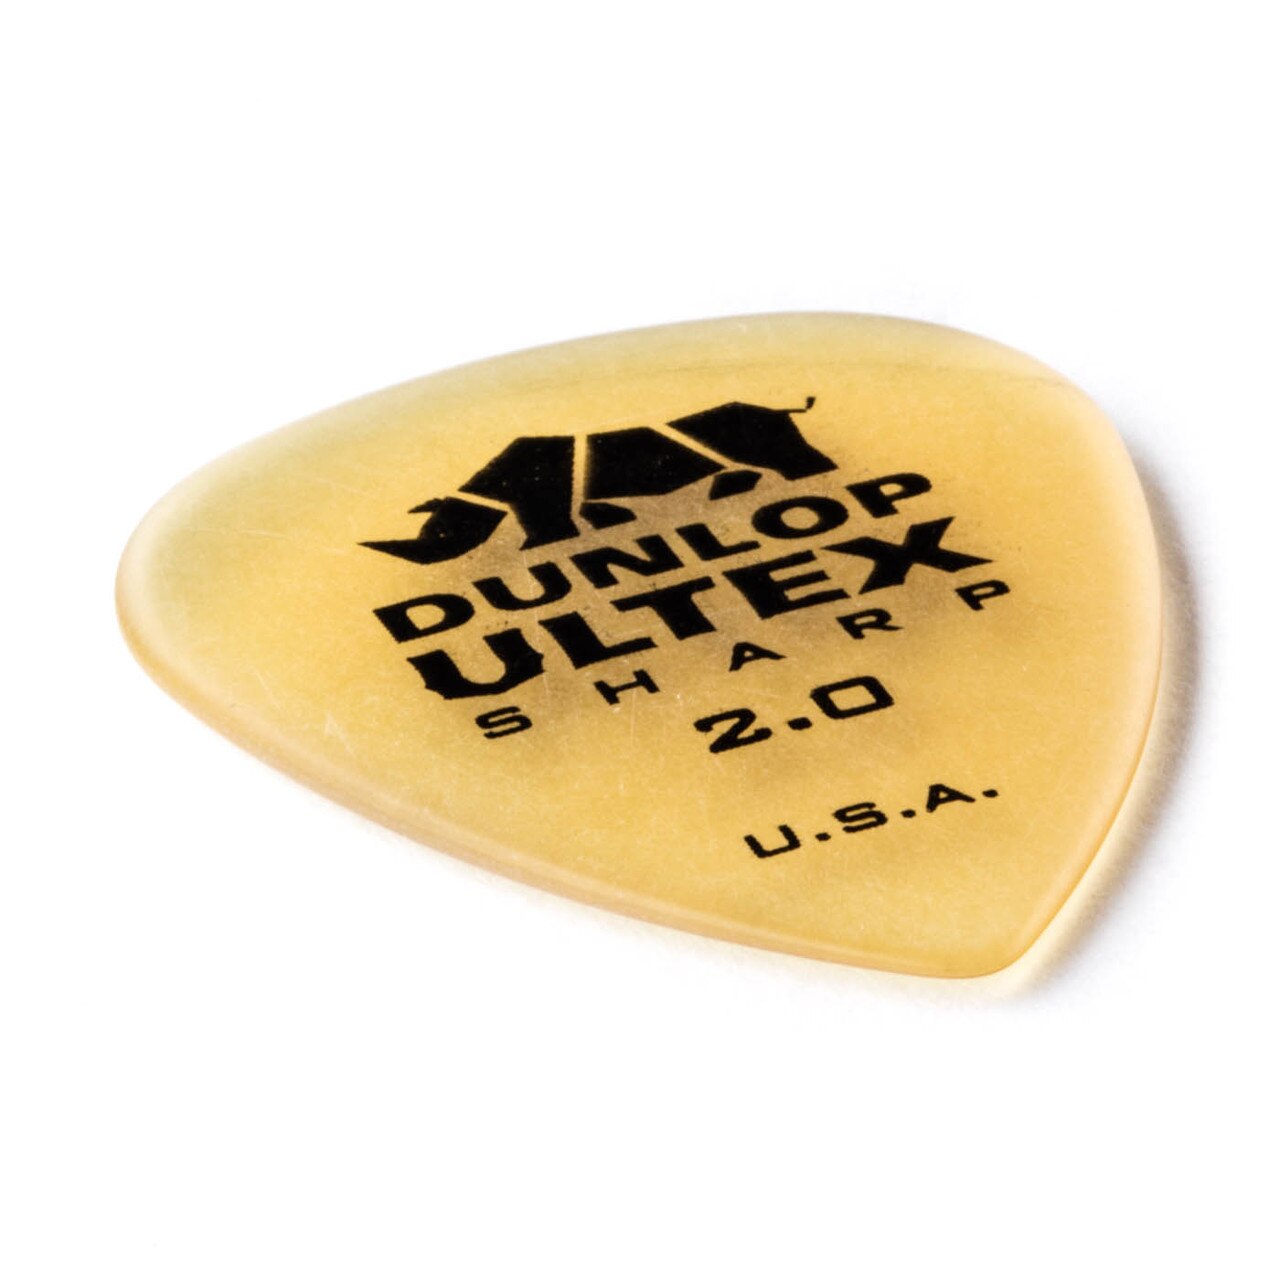 Jim Dunlop Ultex Sharp 433 2.0mm - Plektren - Variation 1